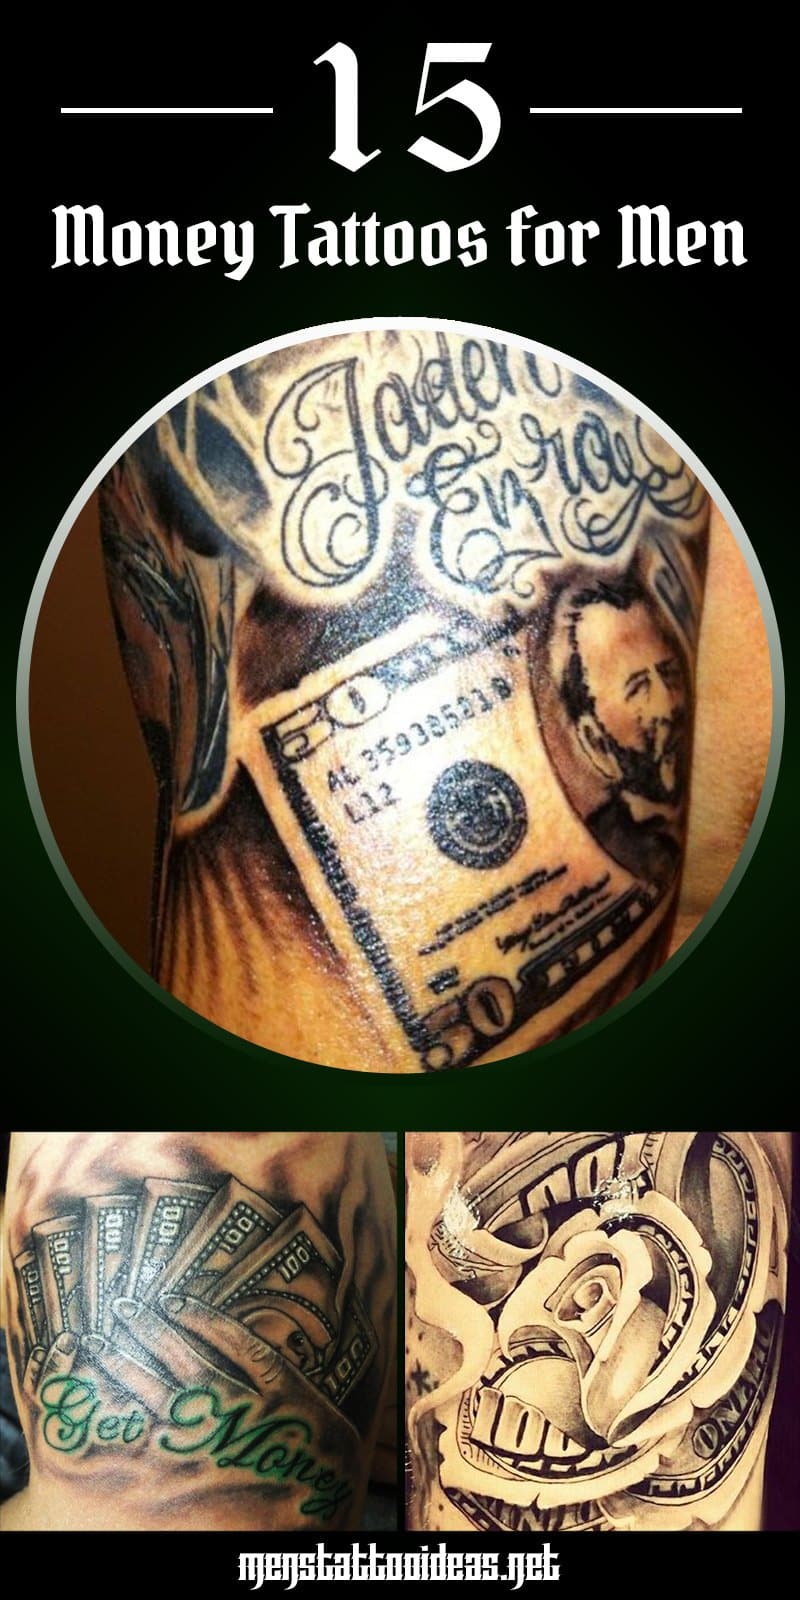 Money Tattoos for Men - Dollar Tattoo Ideas for Guys